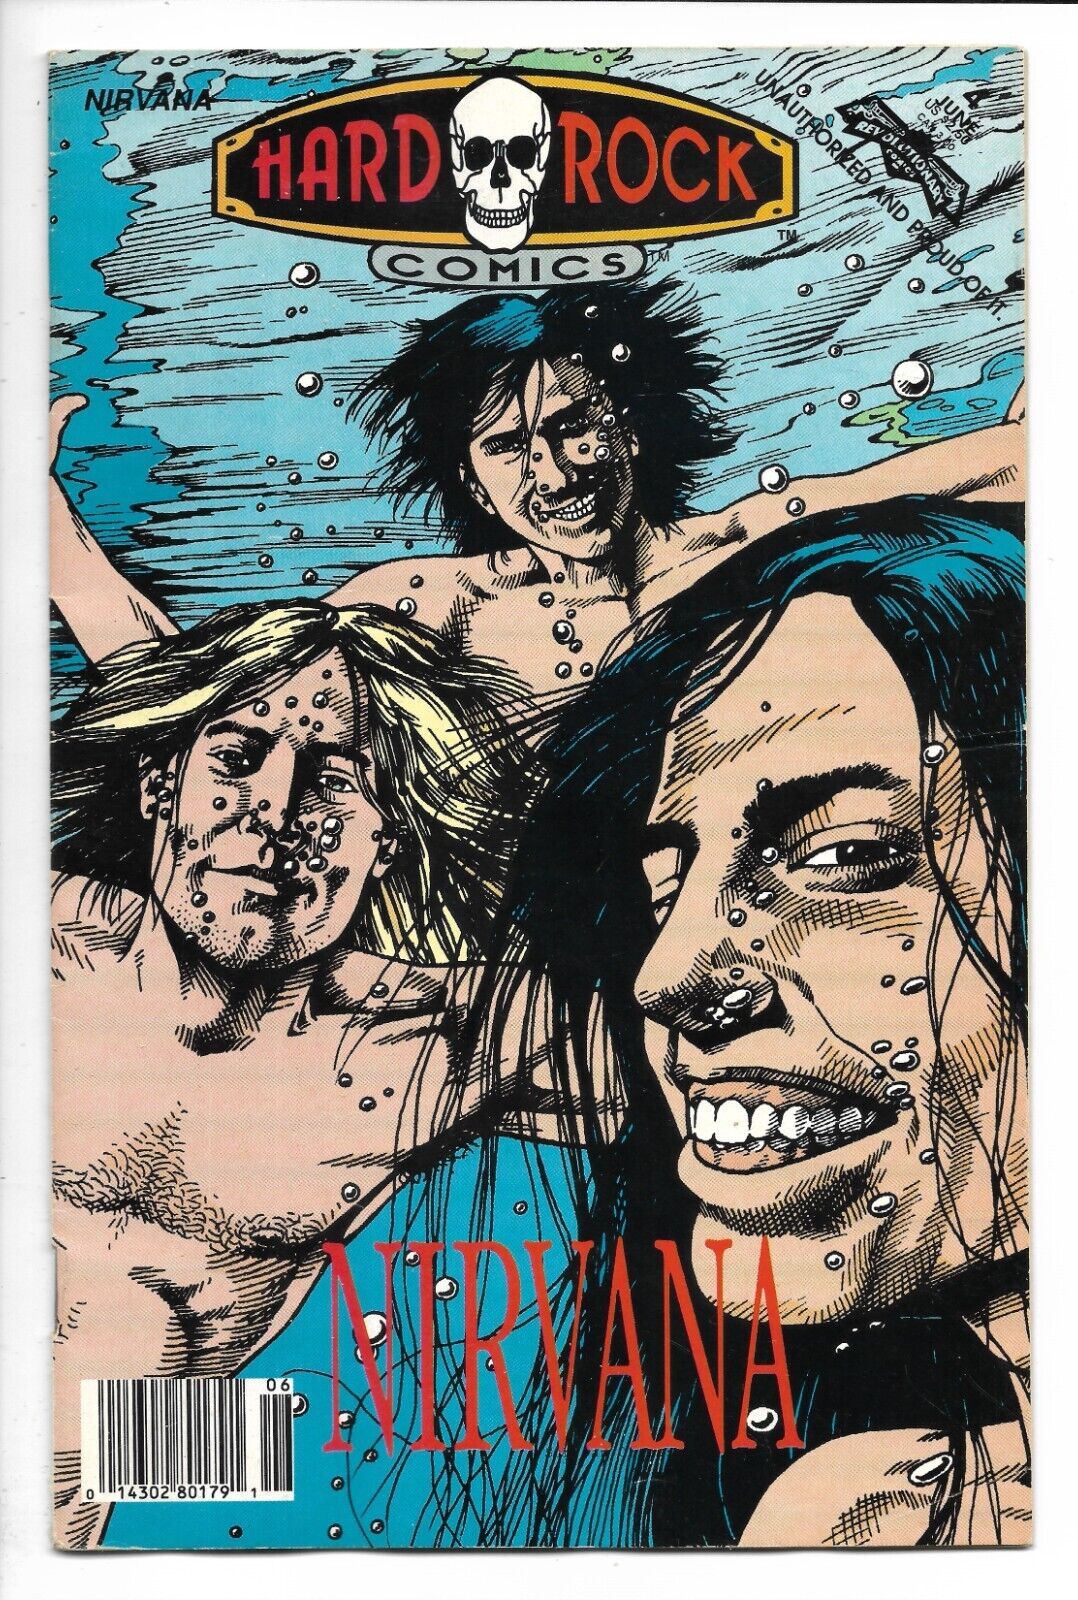 Hard Rock Comics # 4 / Nirvana / Kurt Cobain / Newsstand Edition / 1992